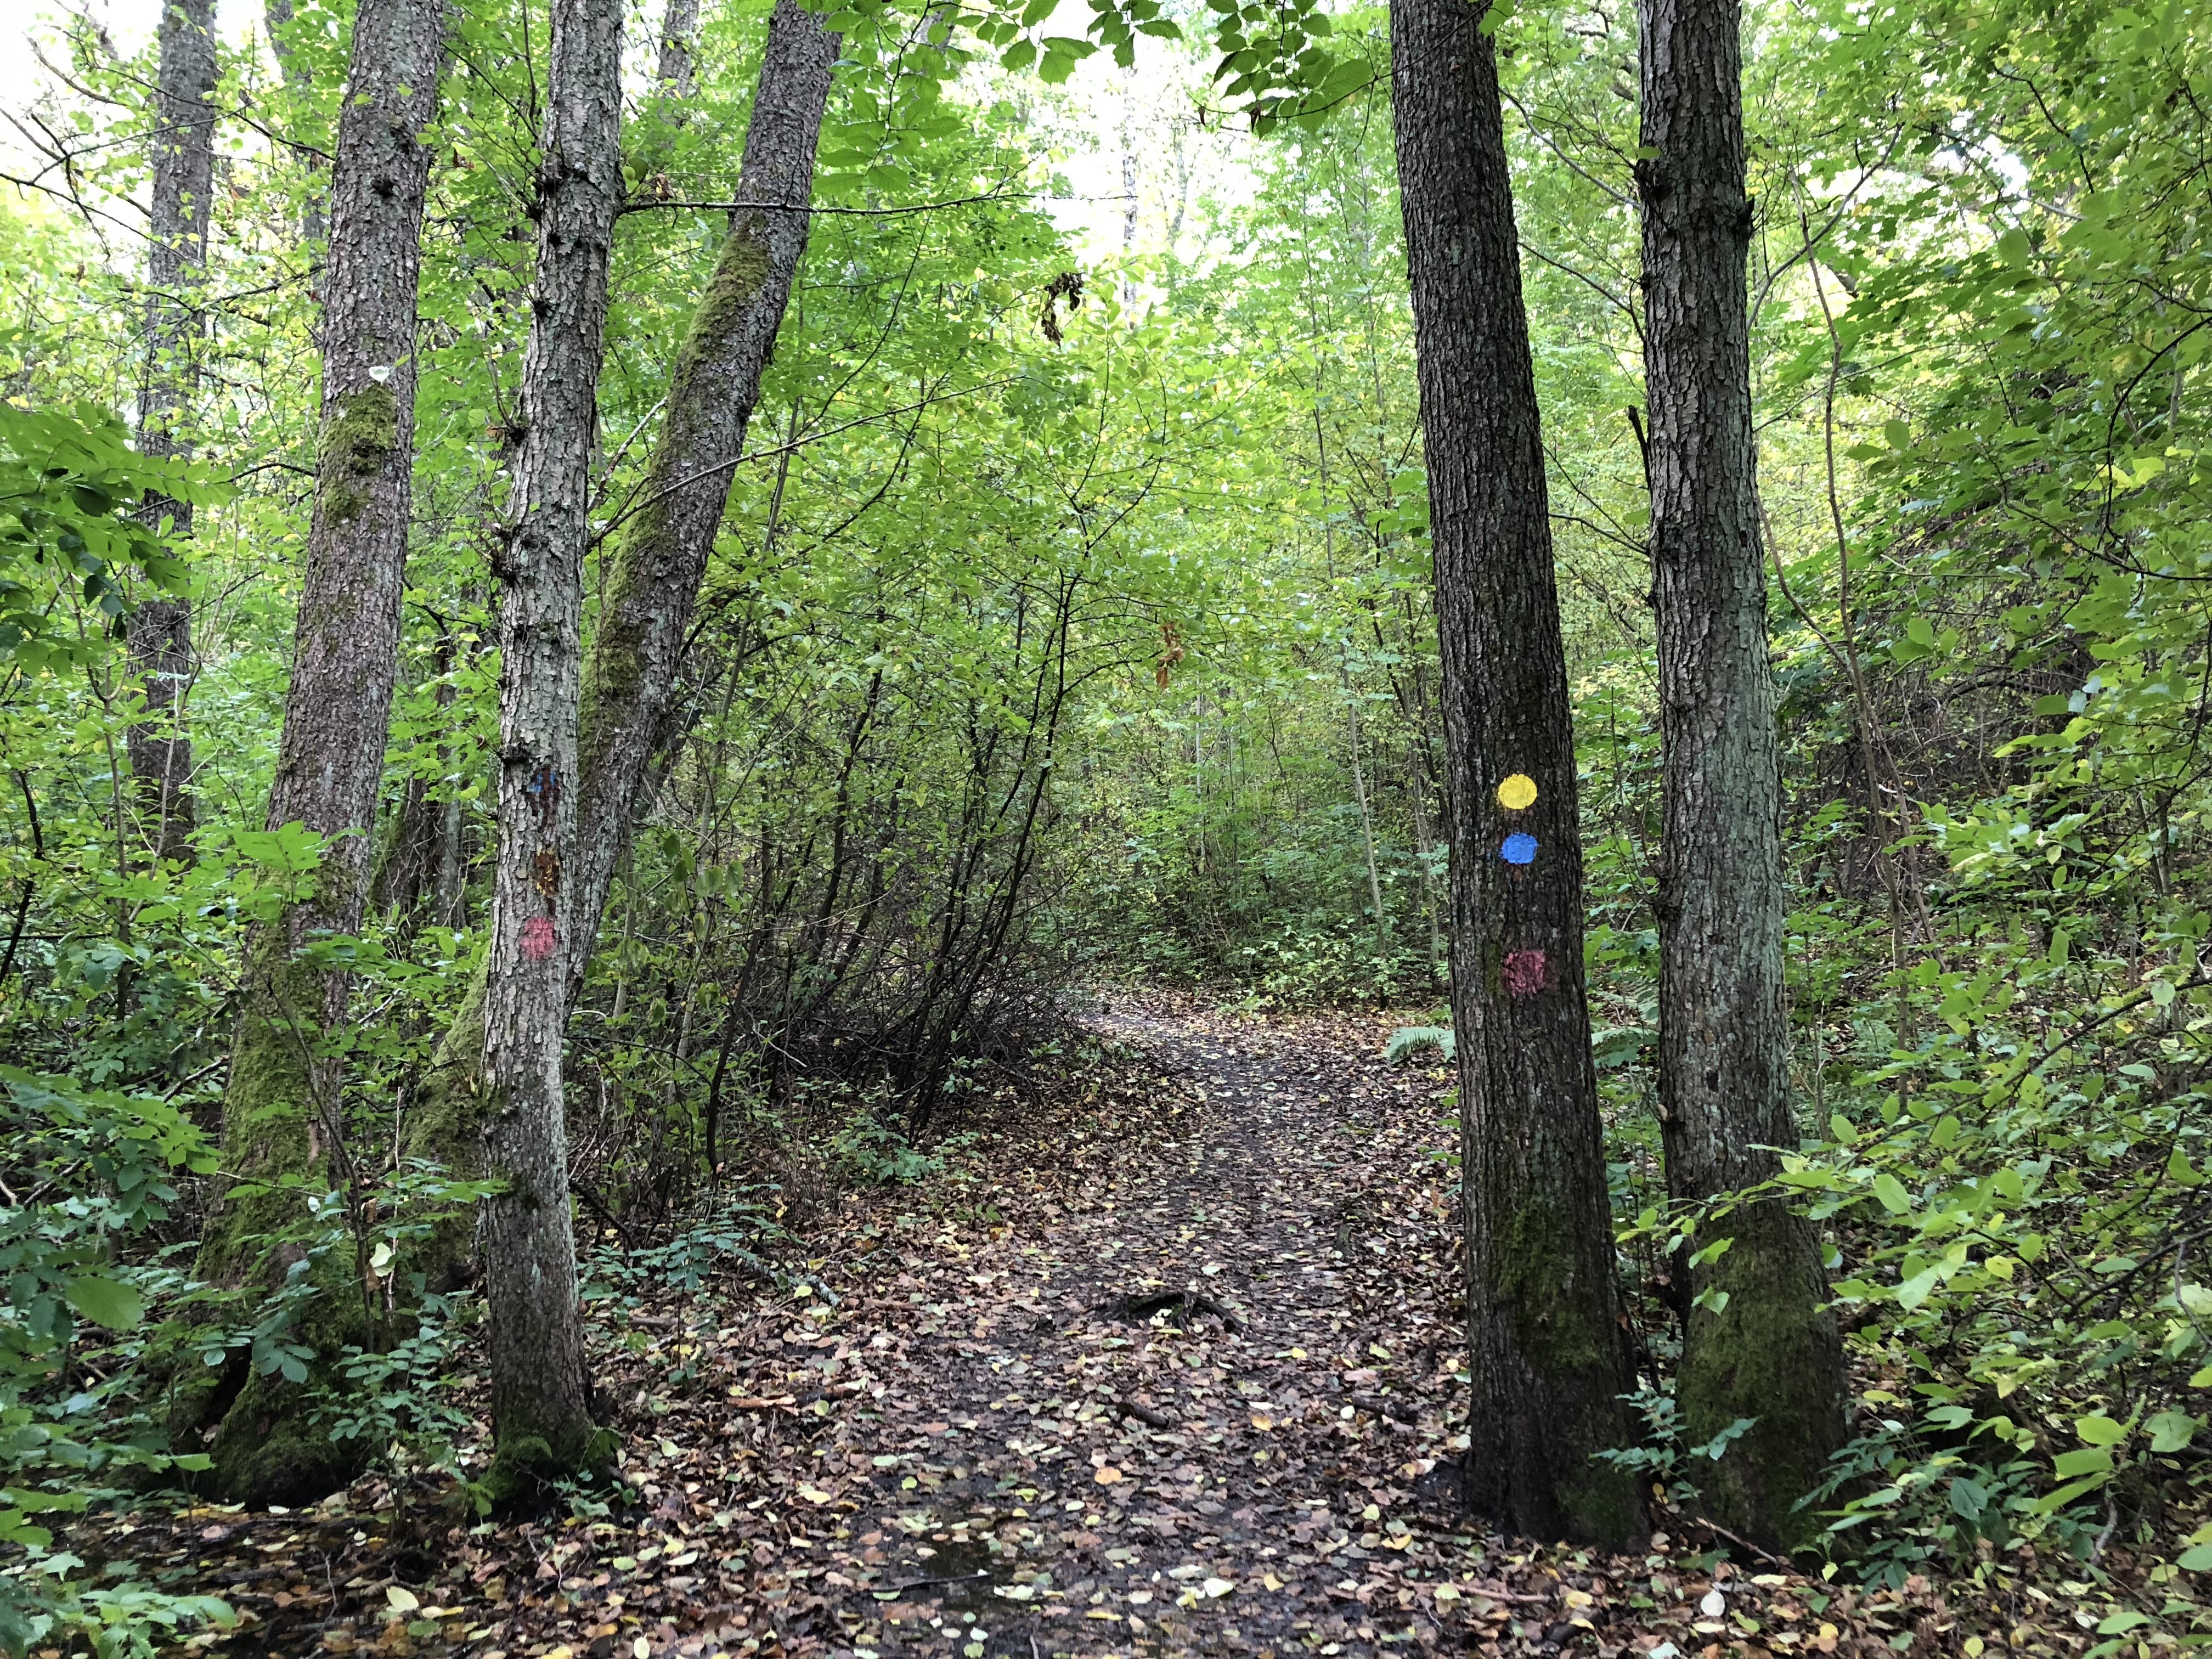 The Blue Trail